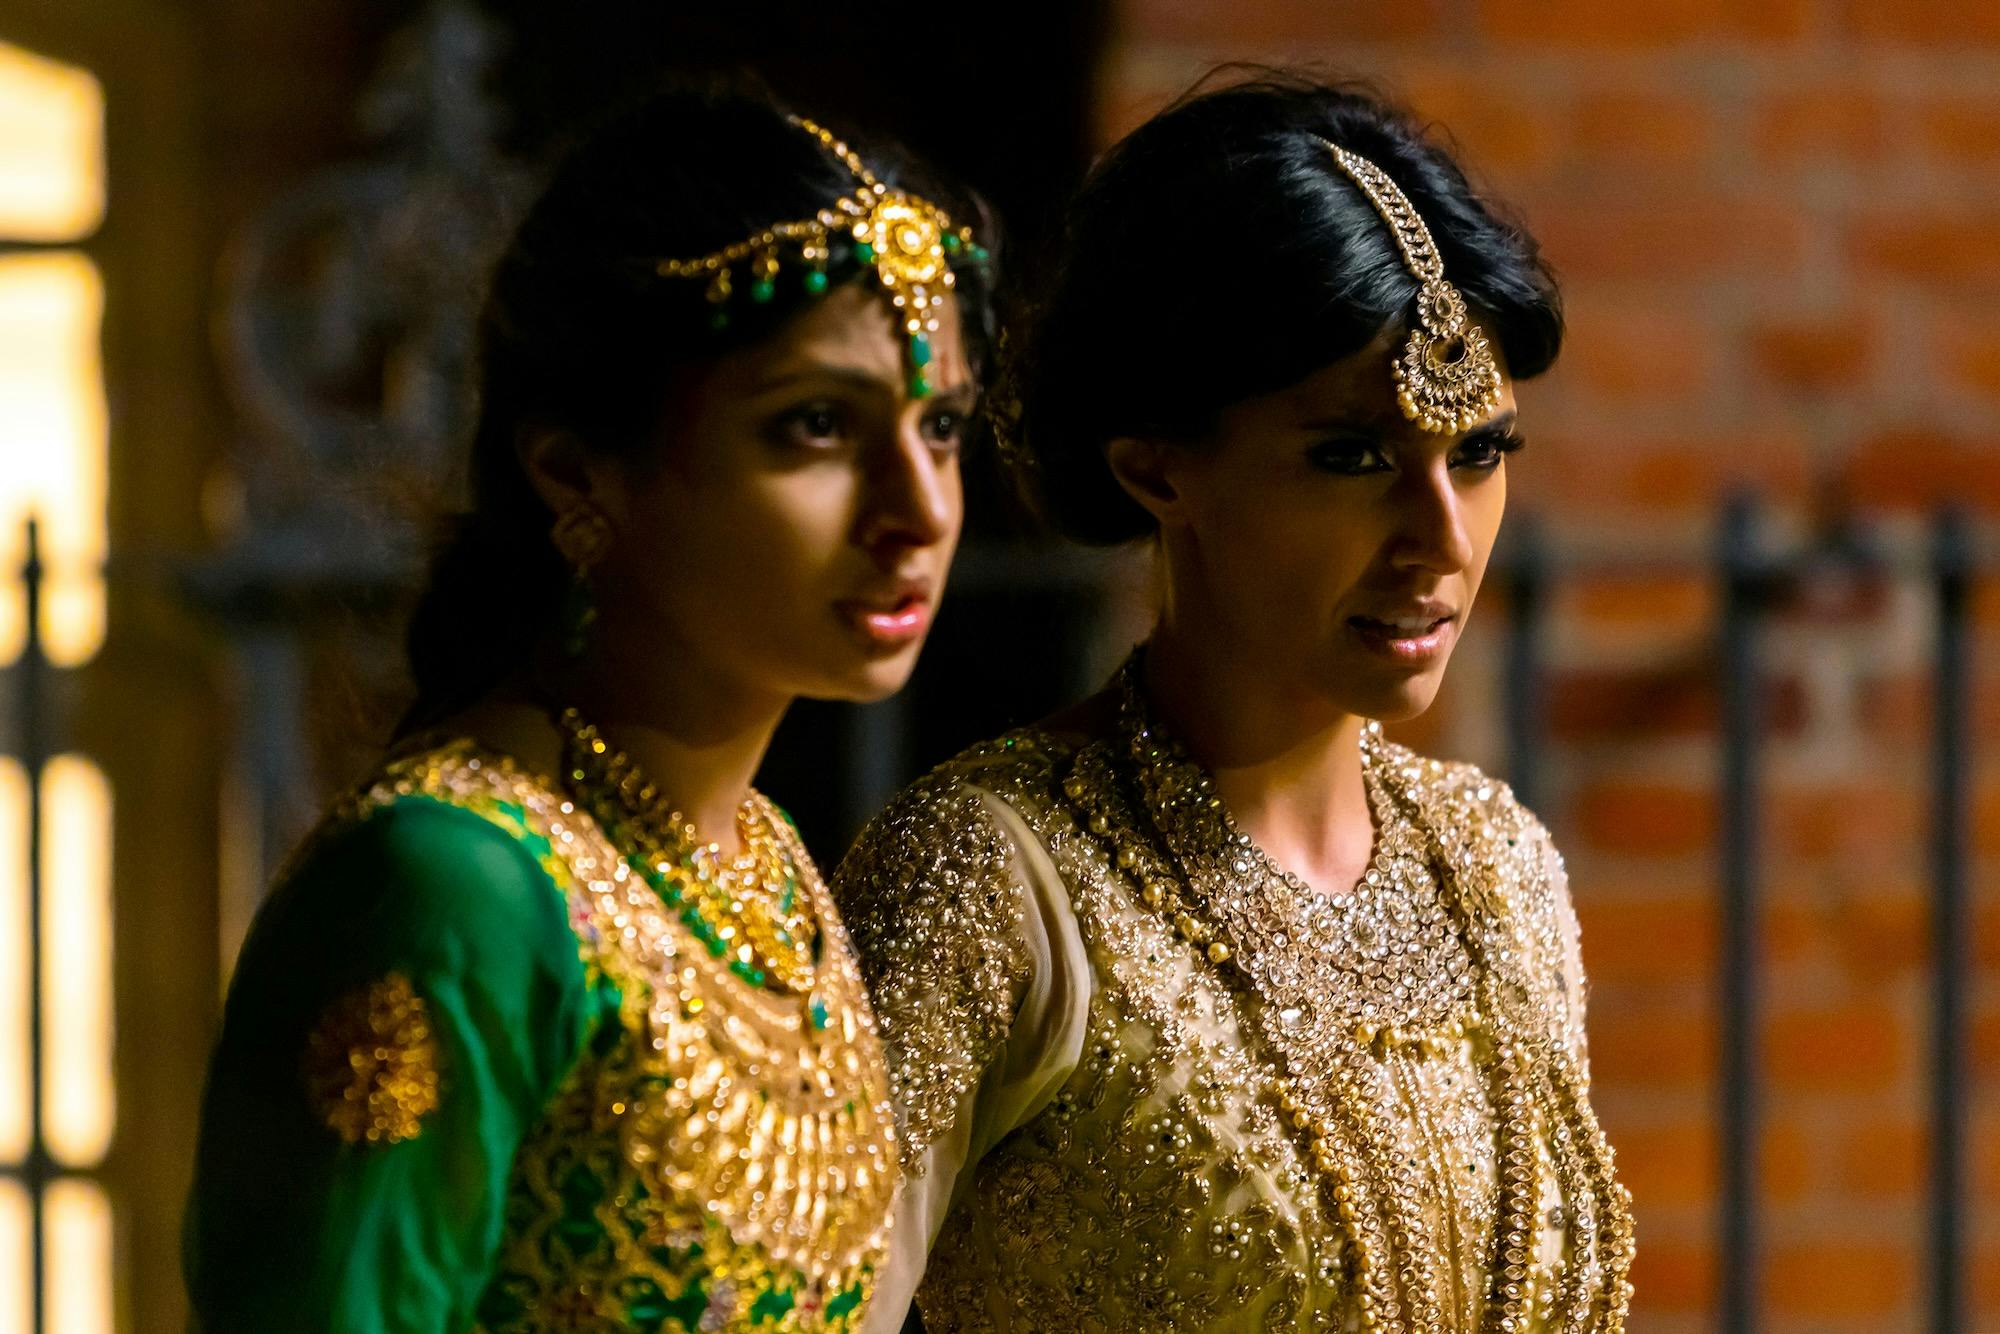 priya kansara (left) and ritu arya (right) in polite society